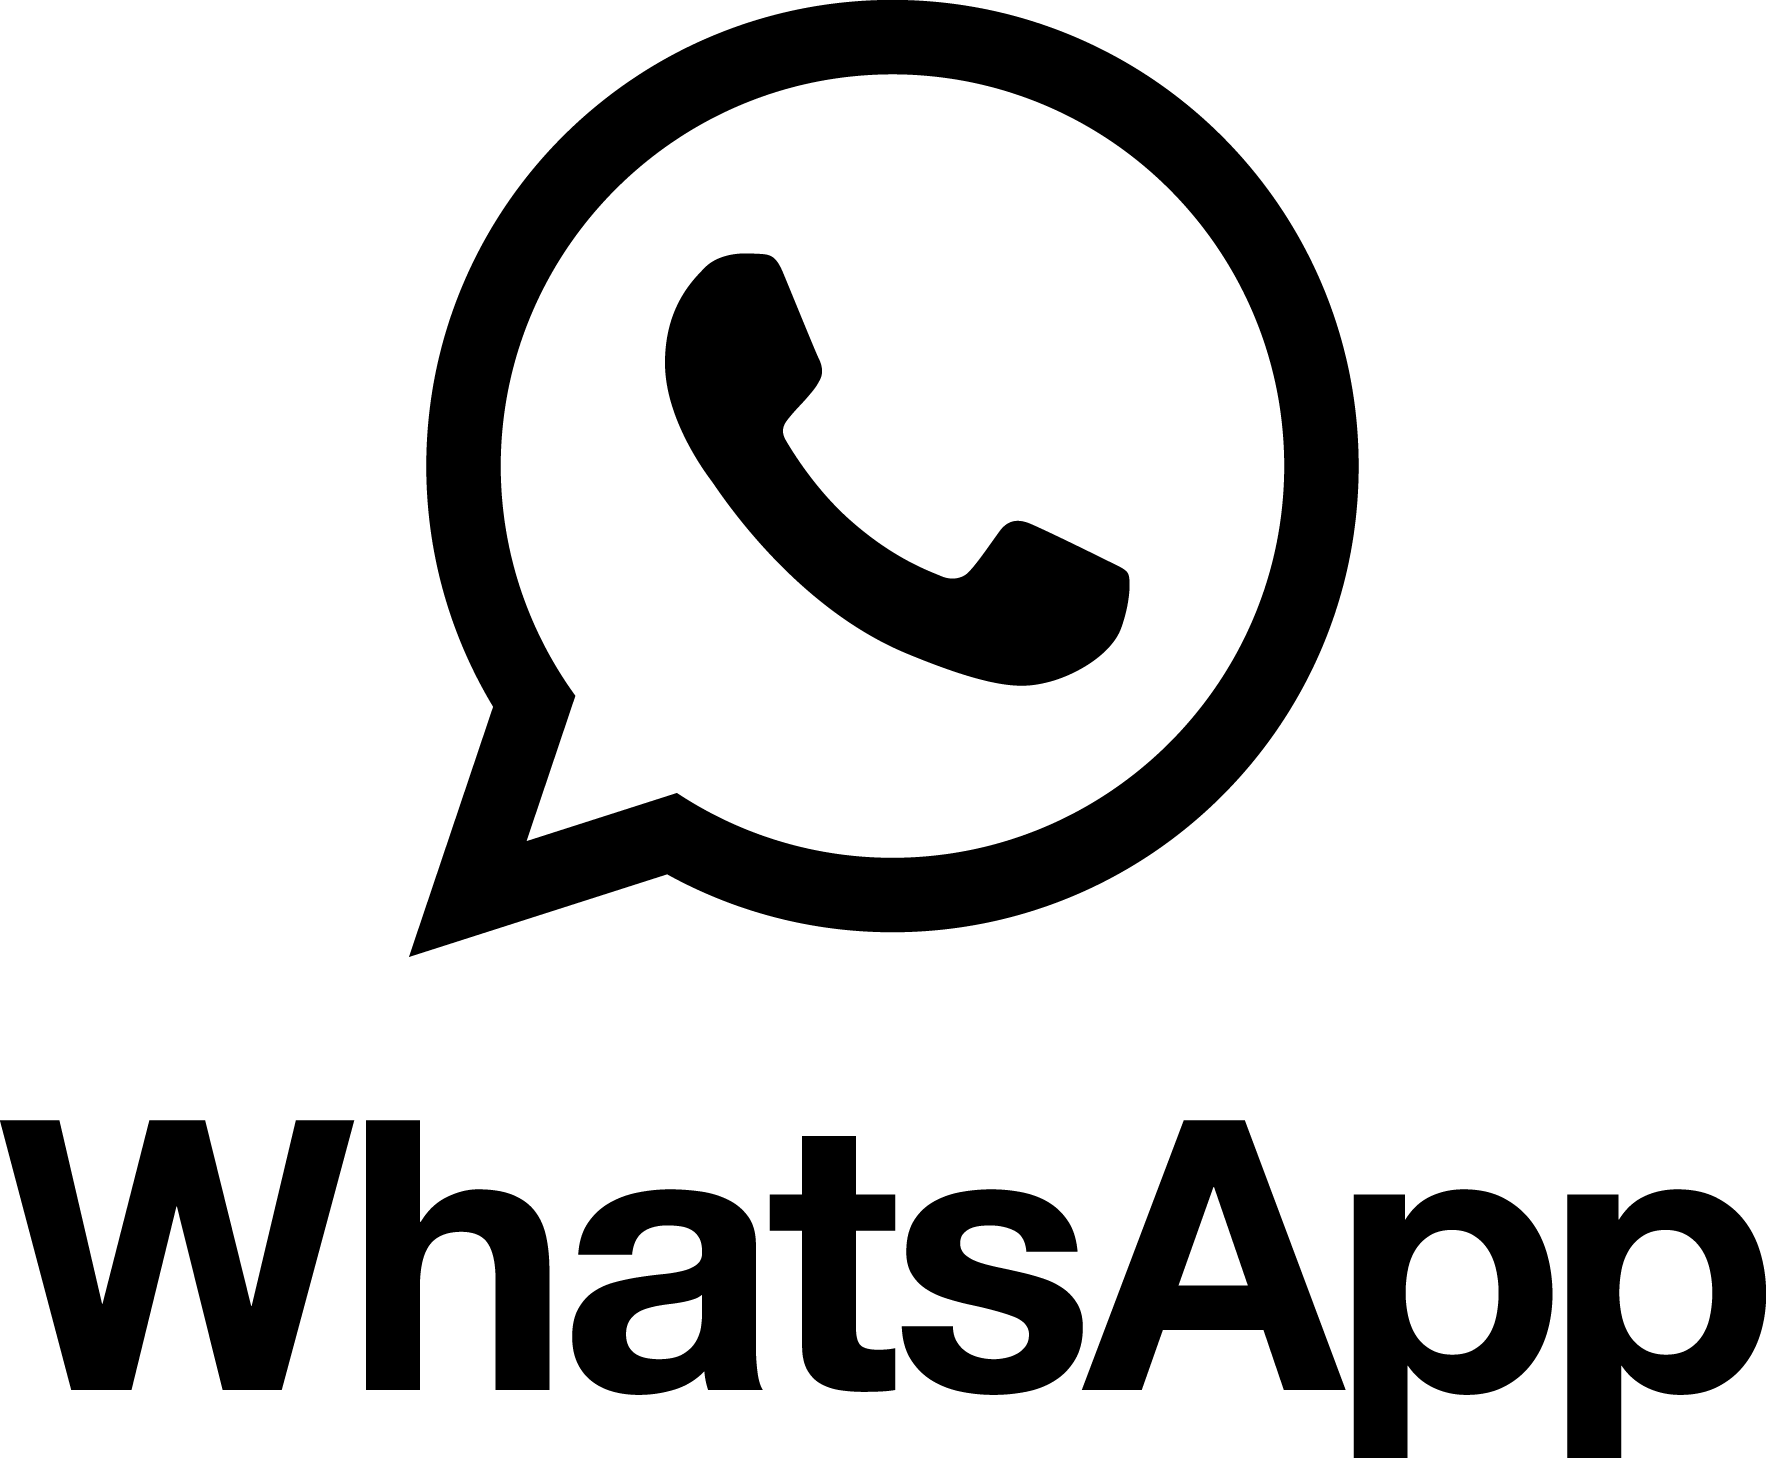 YouTube logo vector (black)